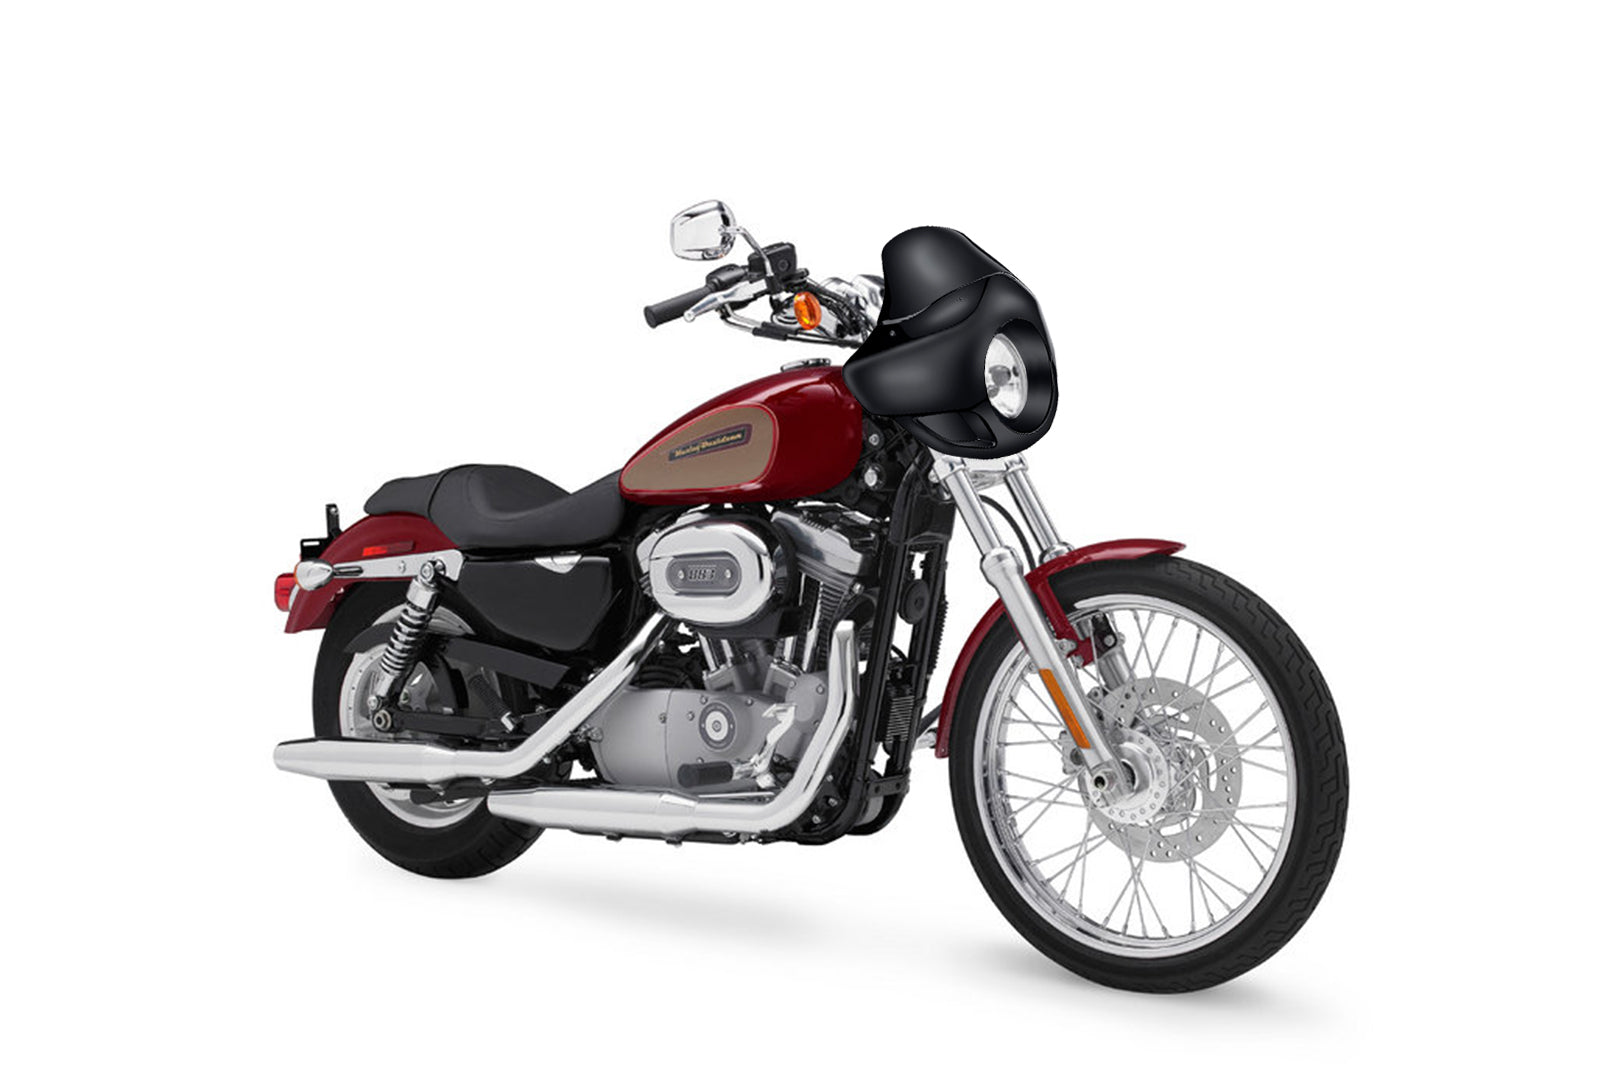 Viking Derby Motorcycle Fairing For Harley Sportster 883 Custom XL883C Gloss Black Bag on Bike View @expand